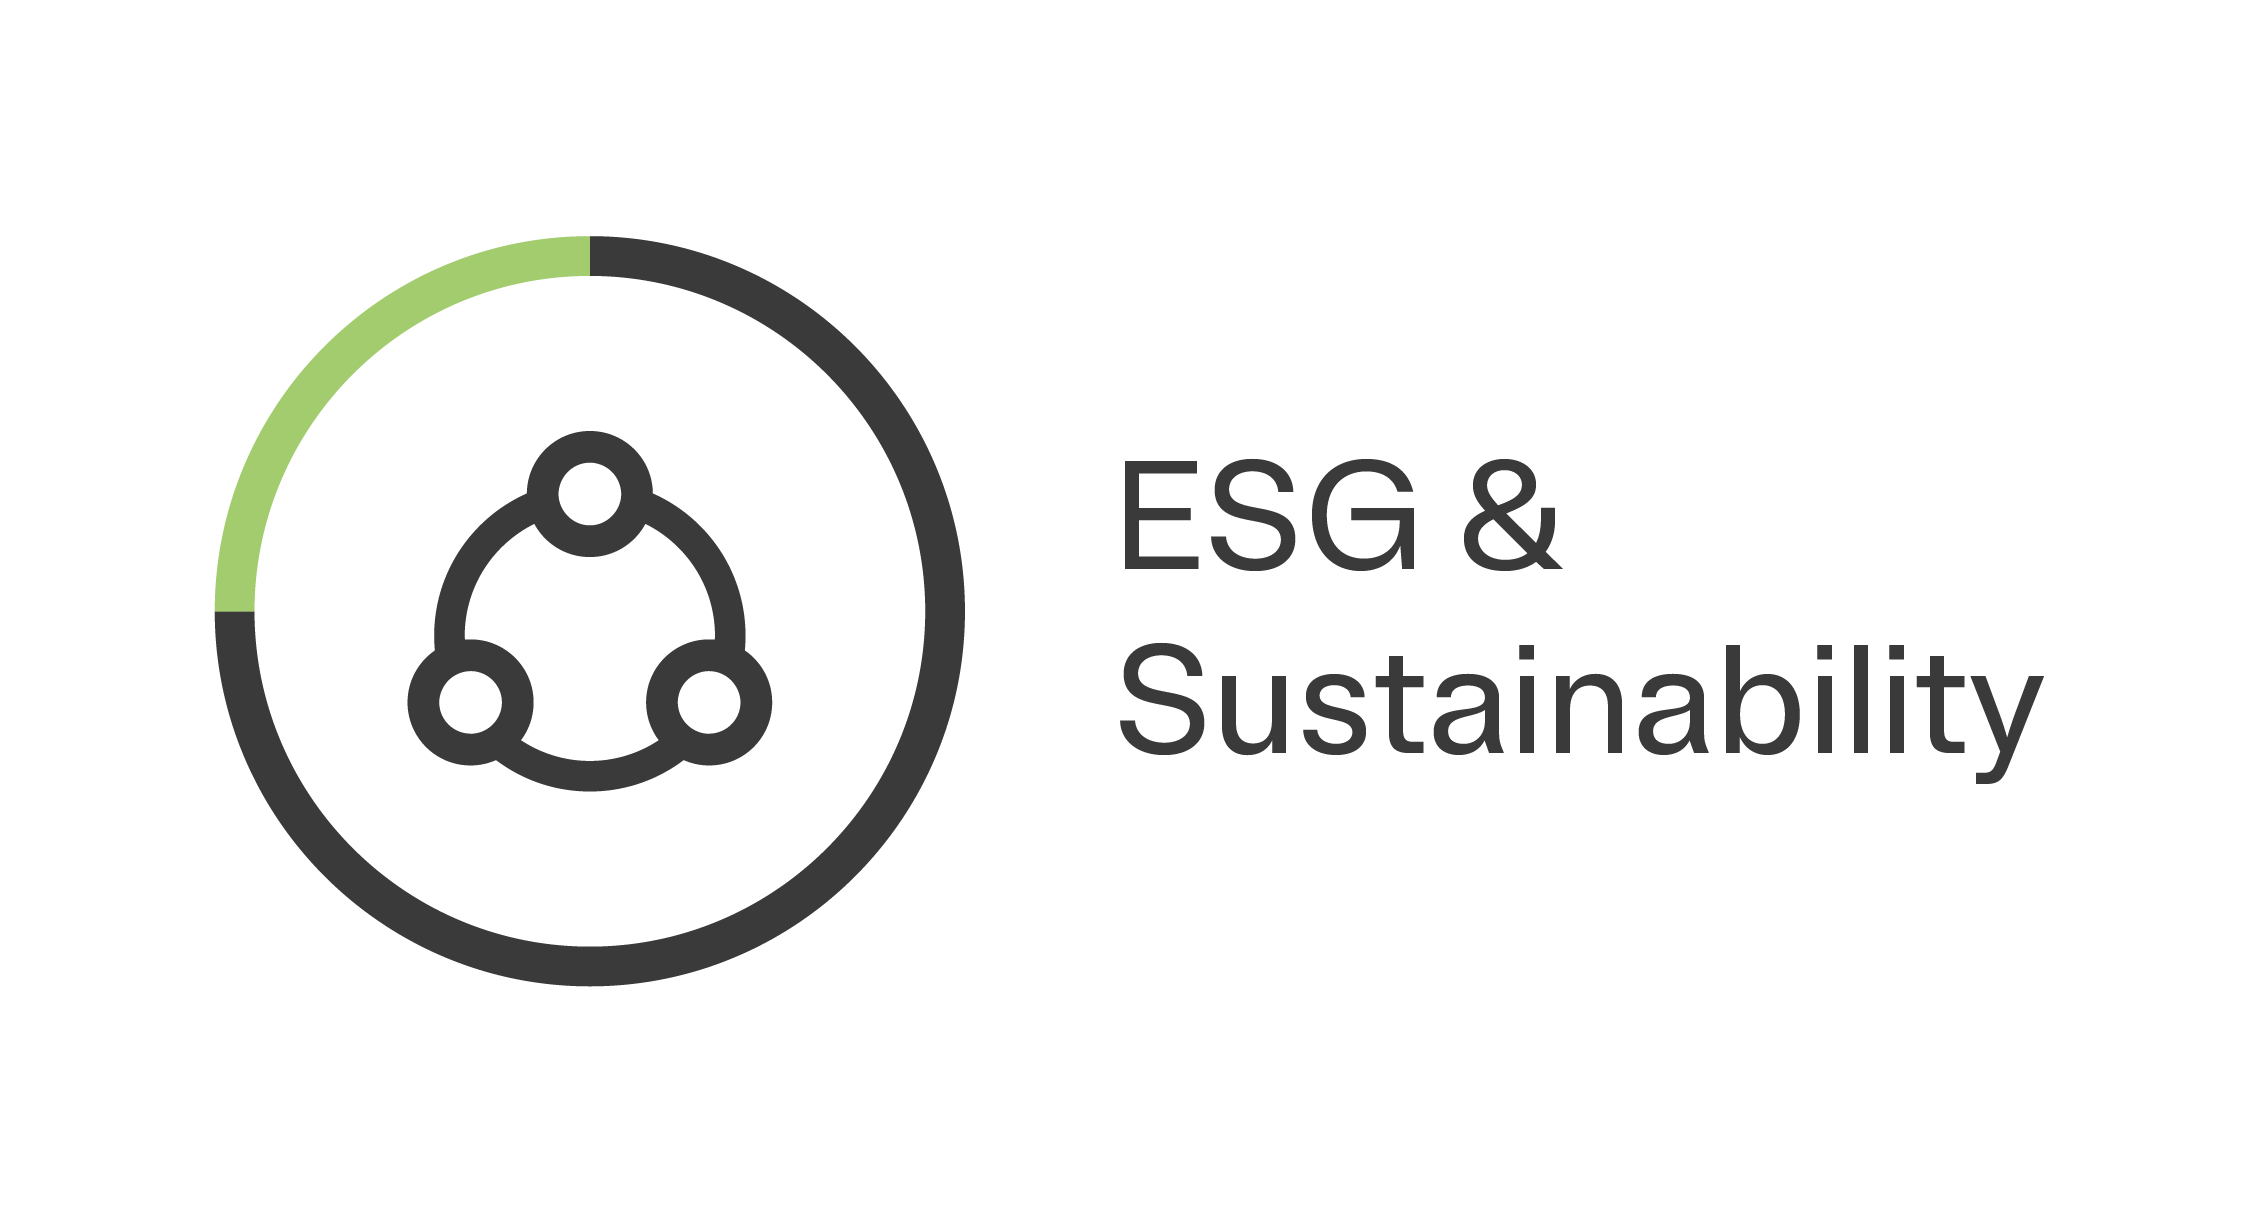 OneTrust Integrates ESG Solutions Into Technology Platform - ESG Today